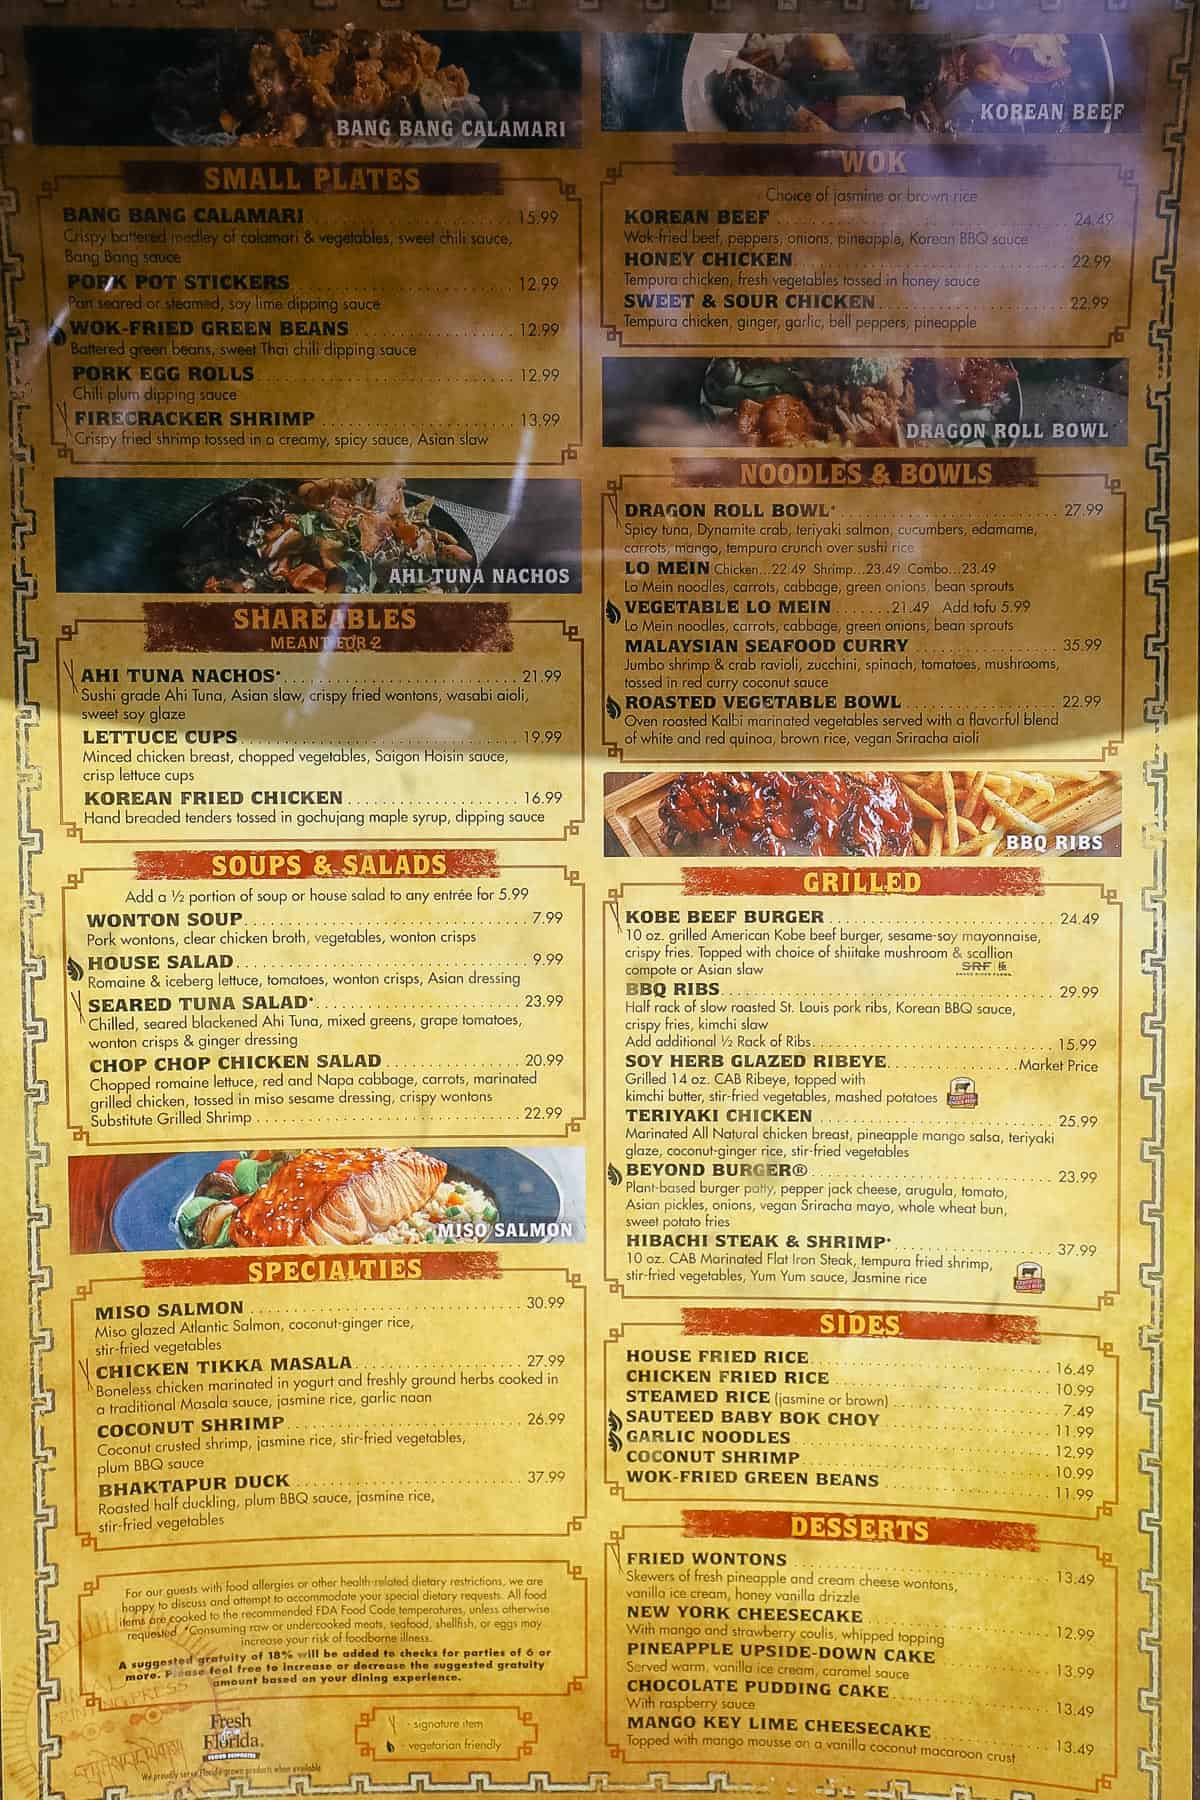 Reviewing Disney World's Popular Restaurant Yak and Yeti, Worth It